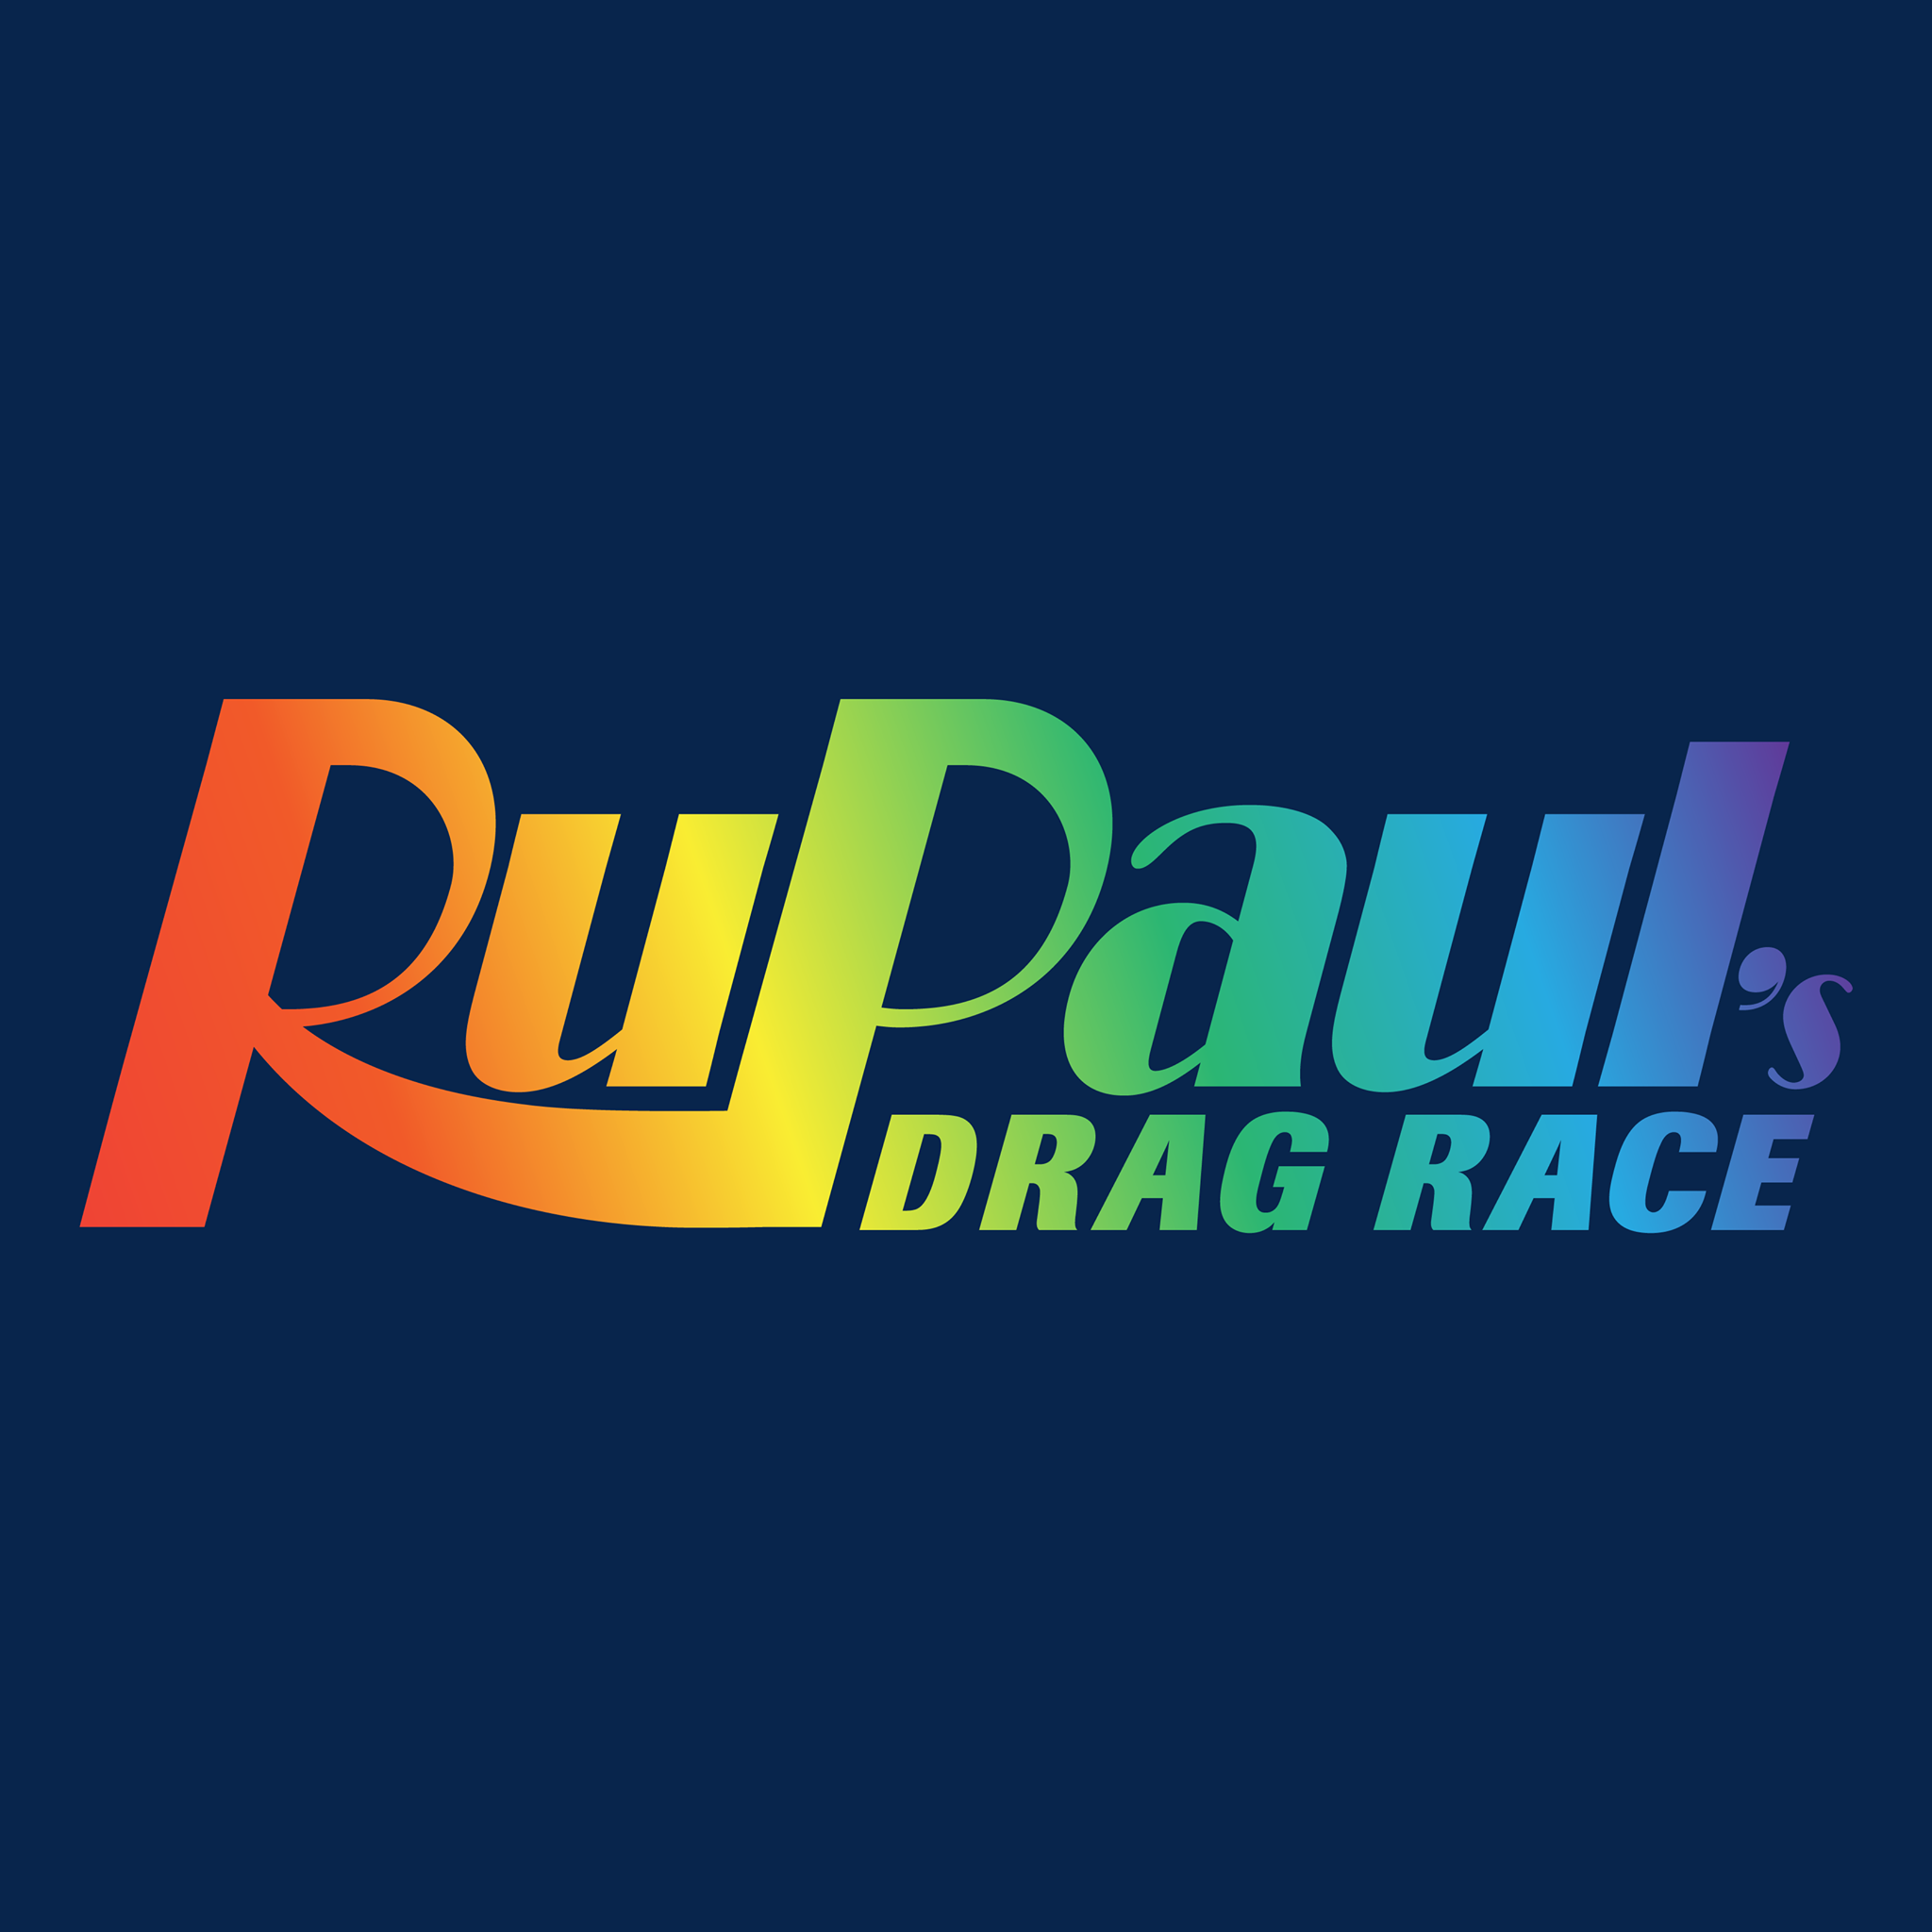 Rupaul's drag race logo.